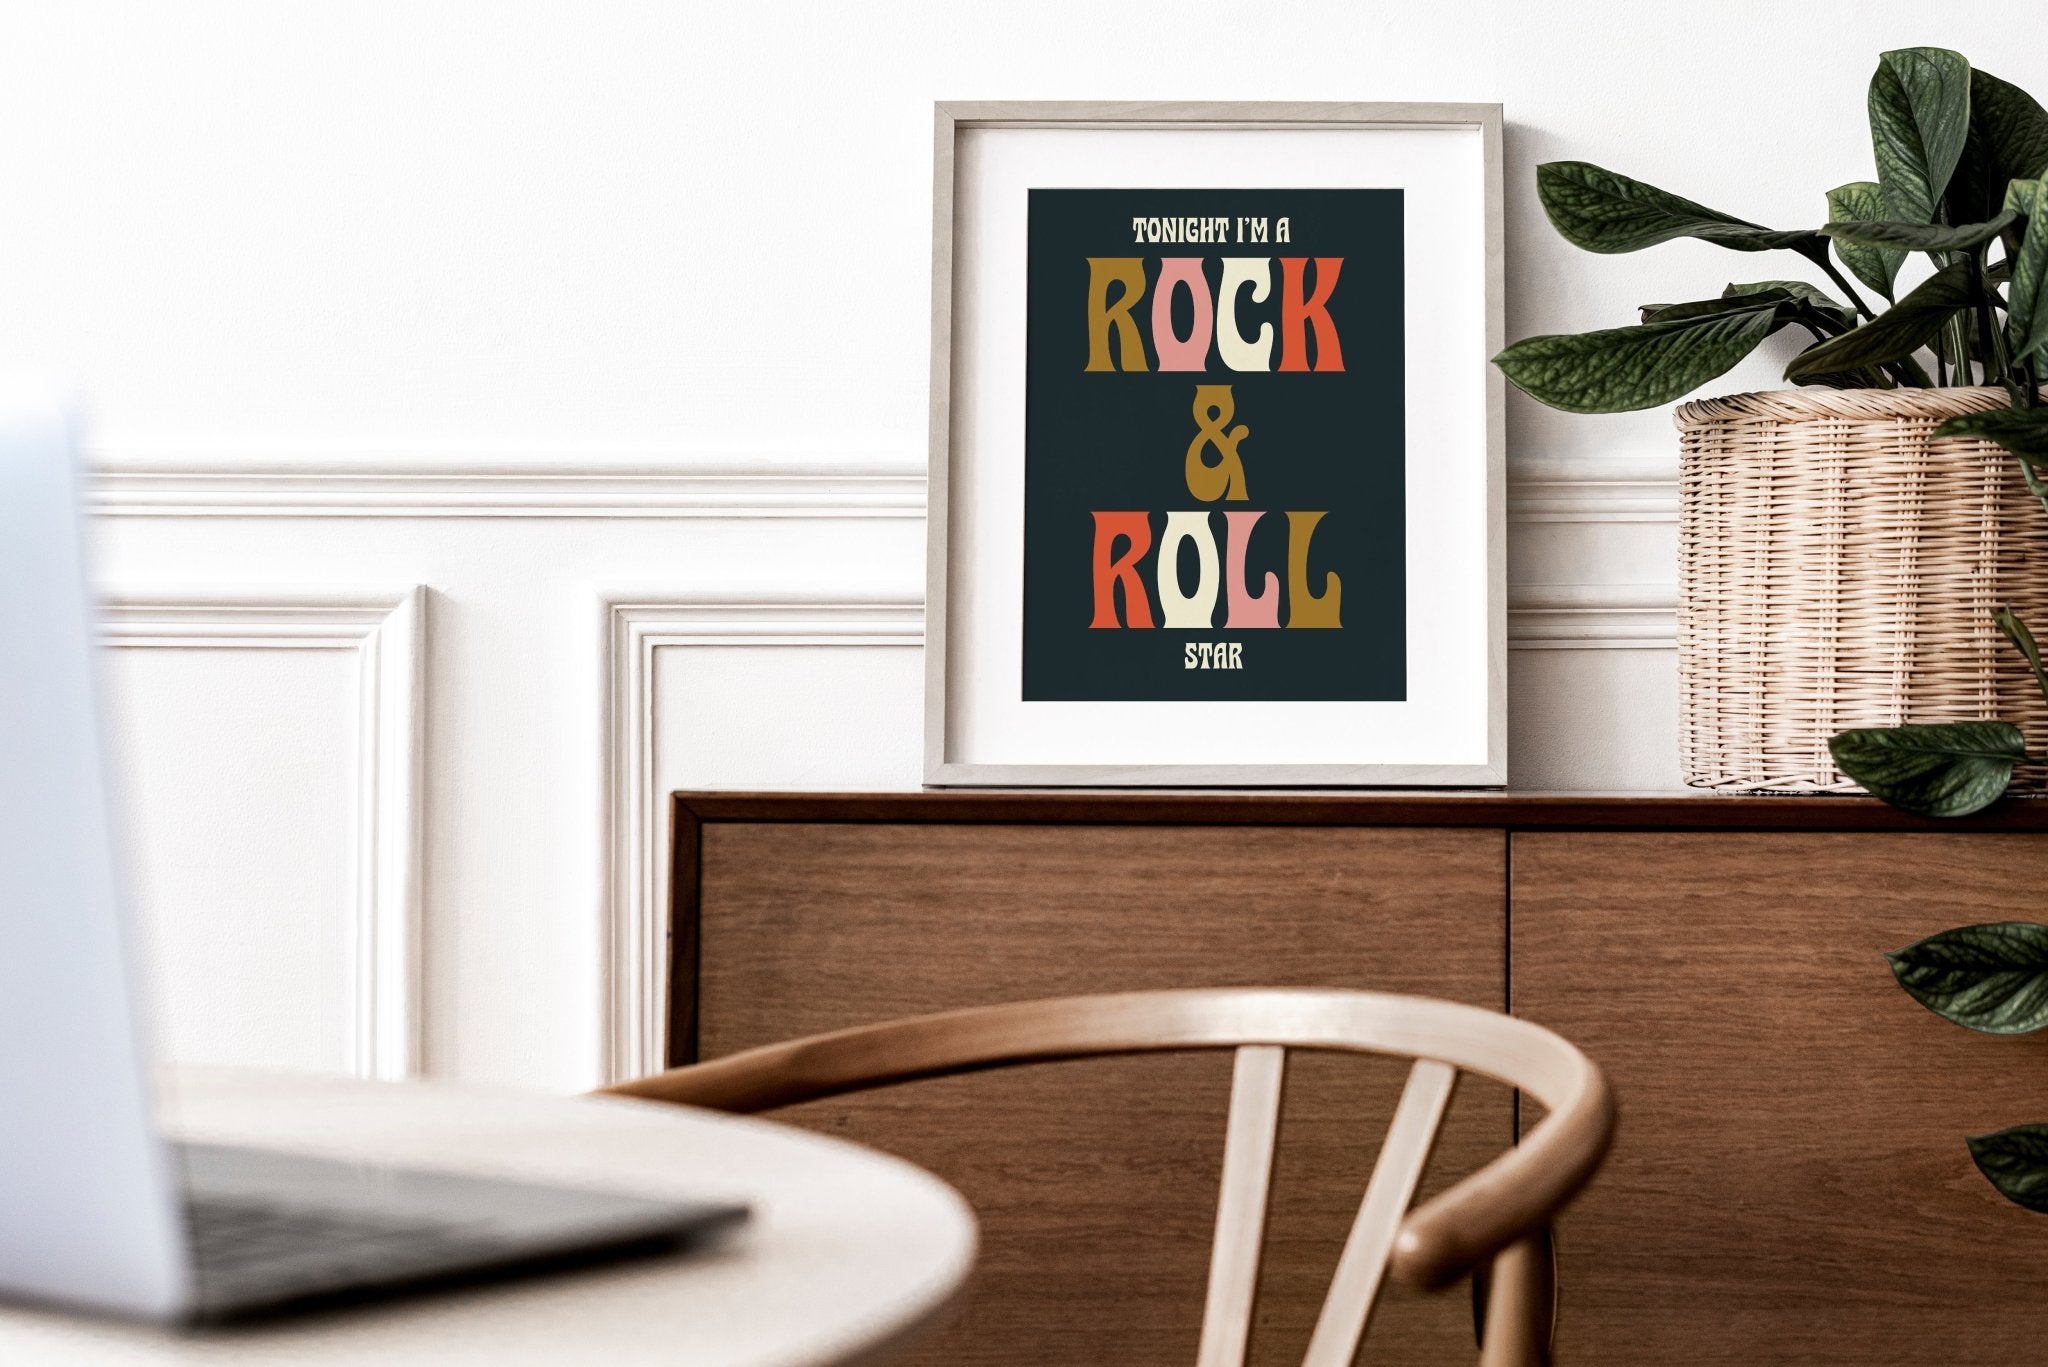 Oasis Rock n Roll Star Retro Print